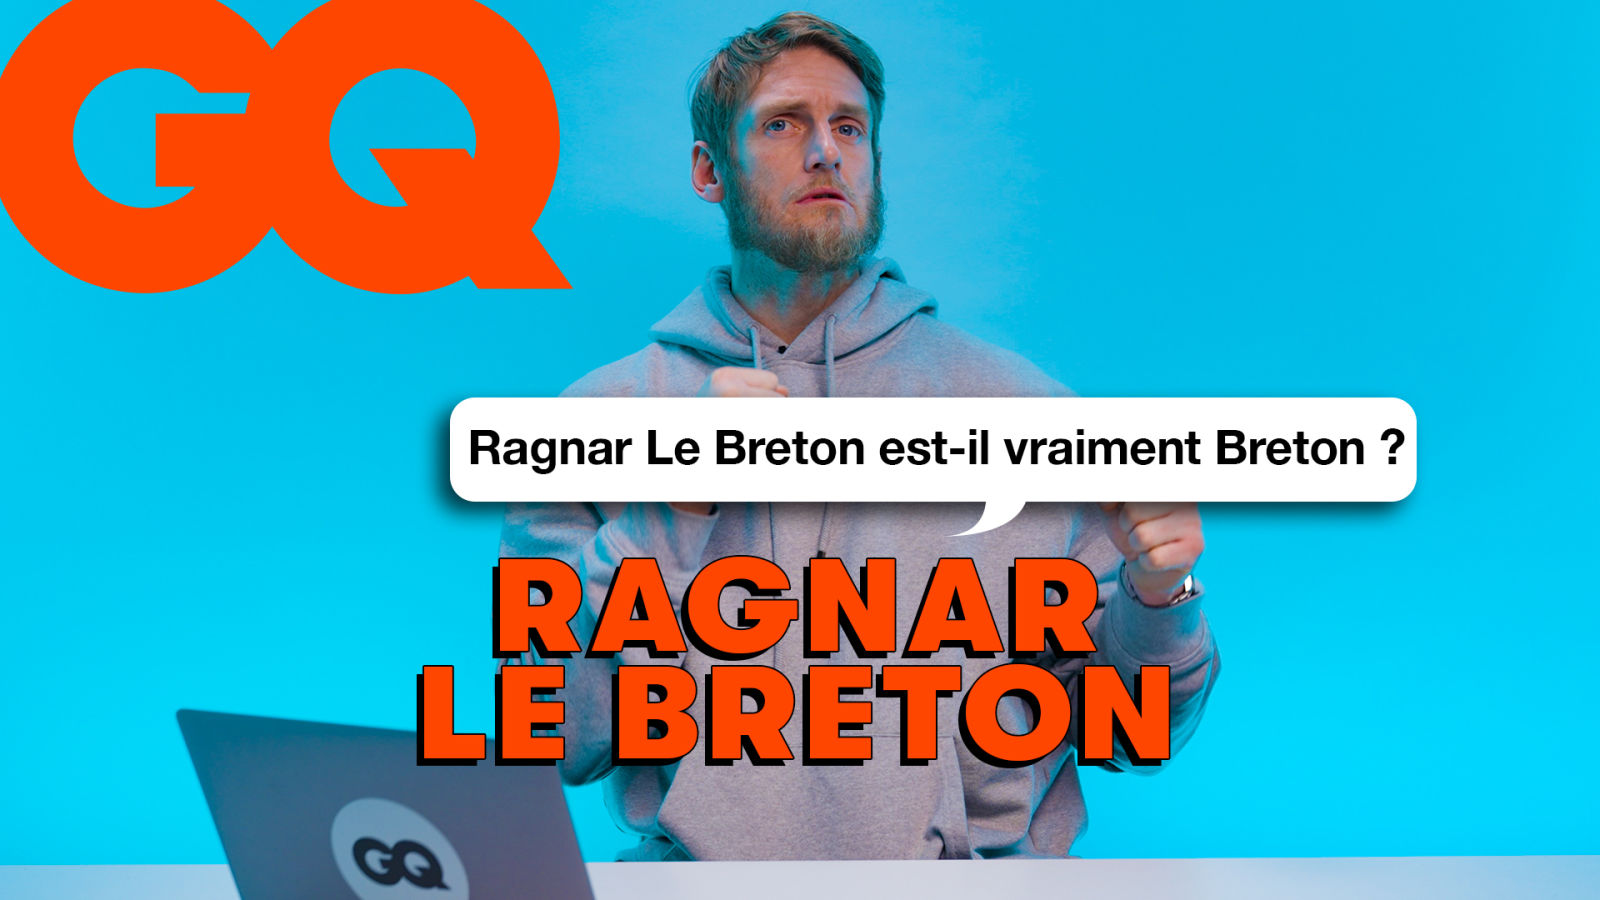 Ragnar Le Breton infiltre les réseaux : MMA, claques, Batman…